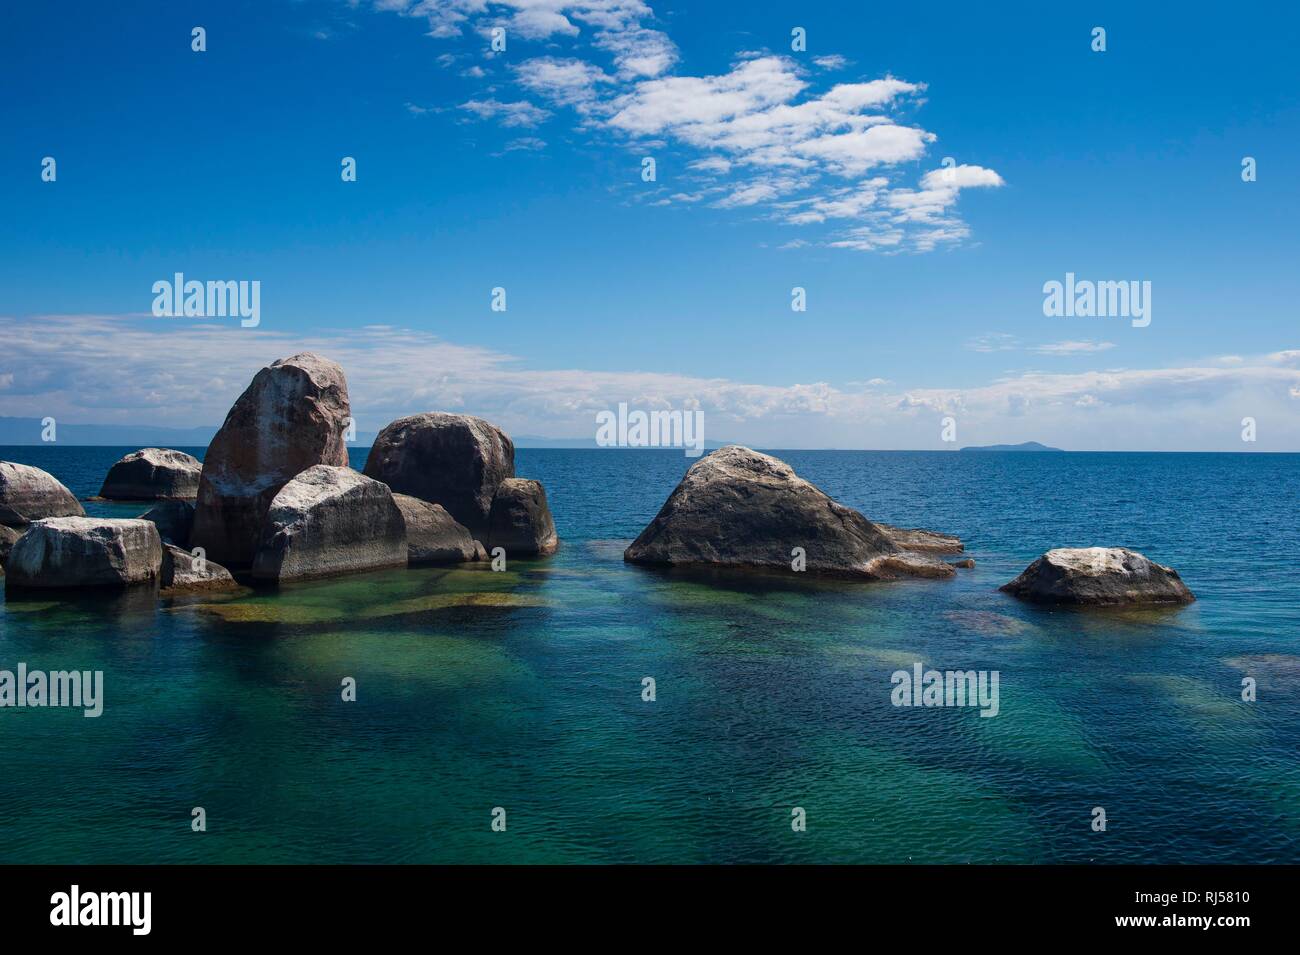 Turquoise clear water and granite rocks, Mumbo island, Cape Maclear, Lake Malawi, Malawi Stock Photo